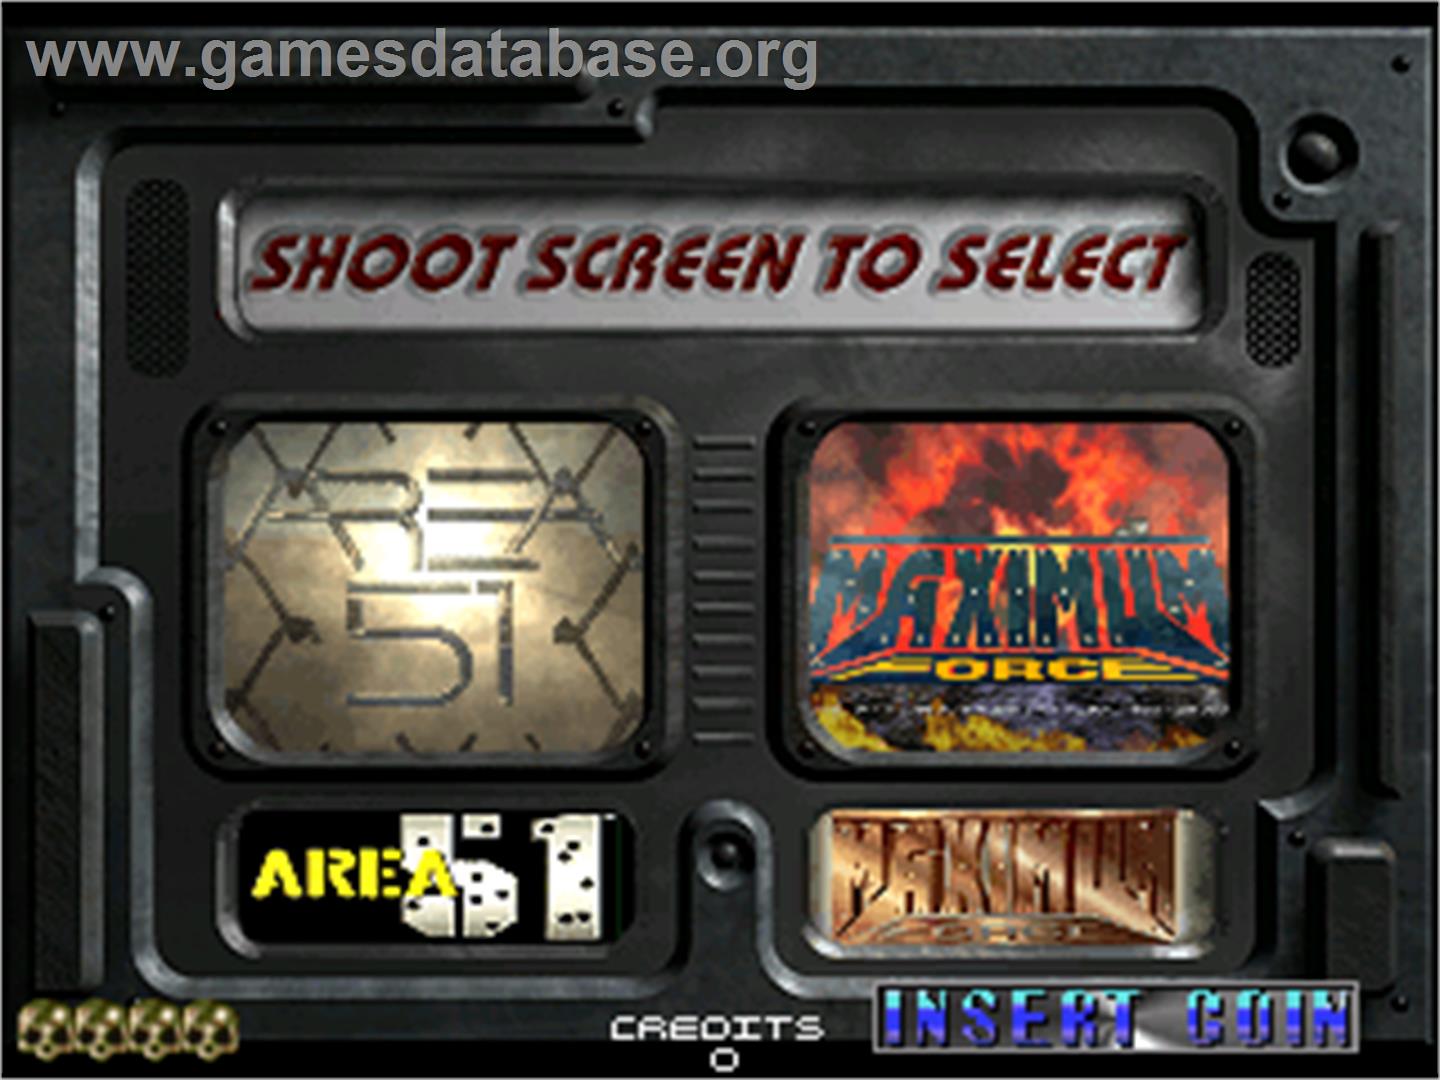 Area 51 / Maximum Force Duo v2.0 - Arcade - Artwork - Select Screen